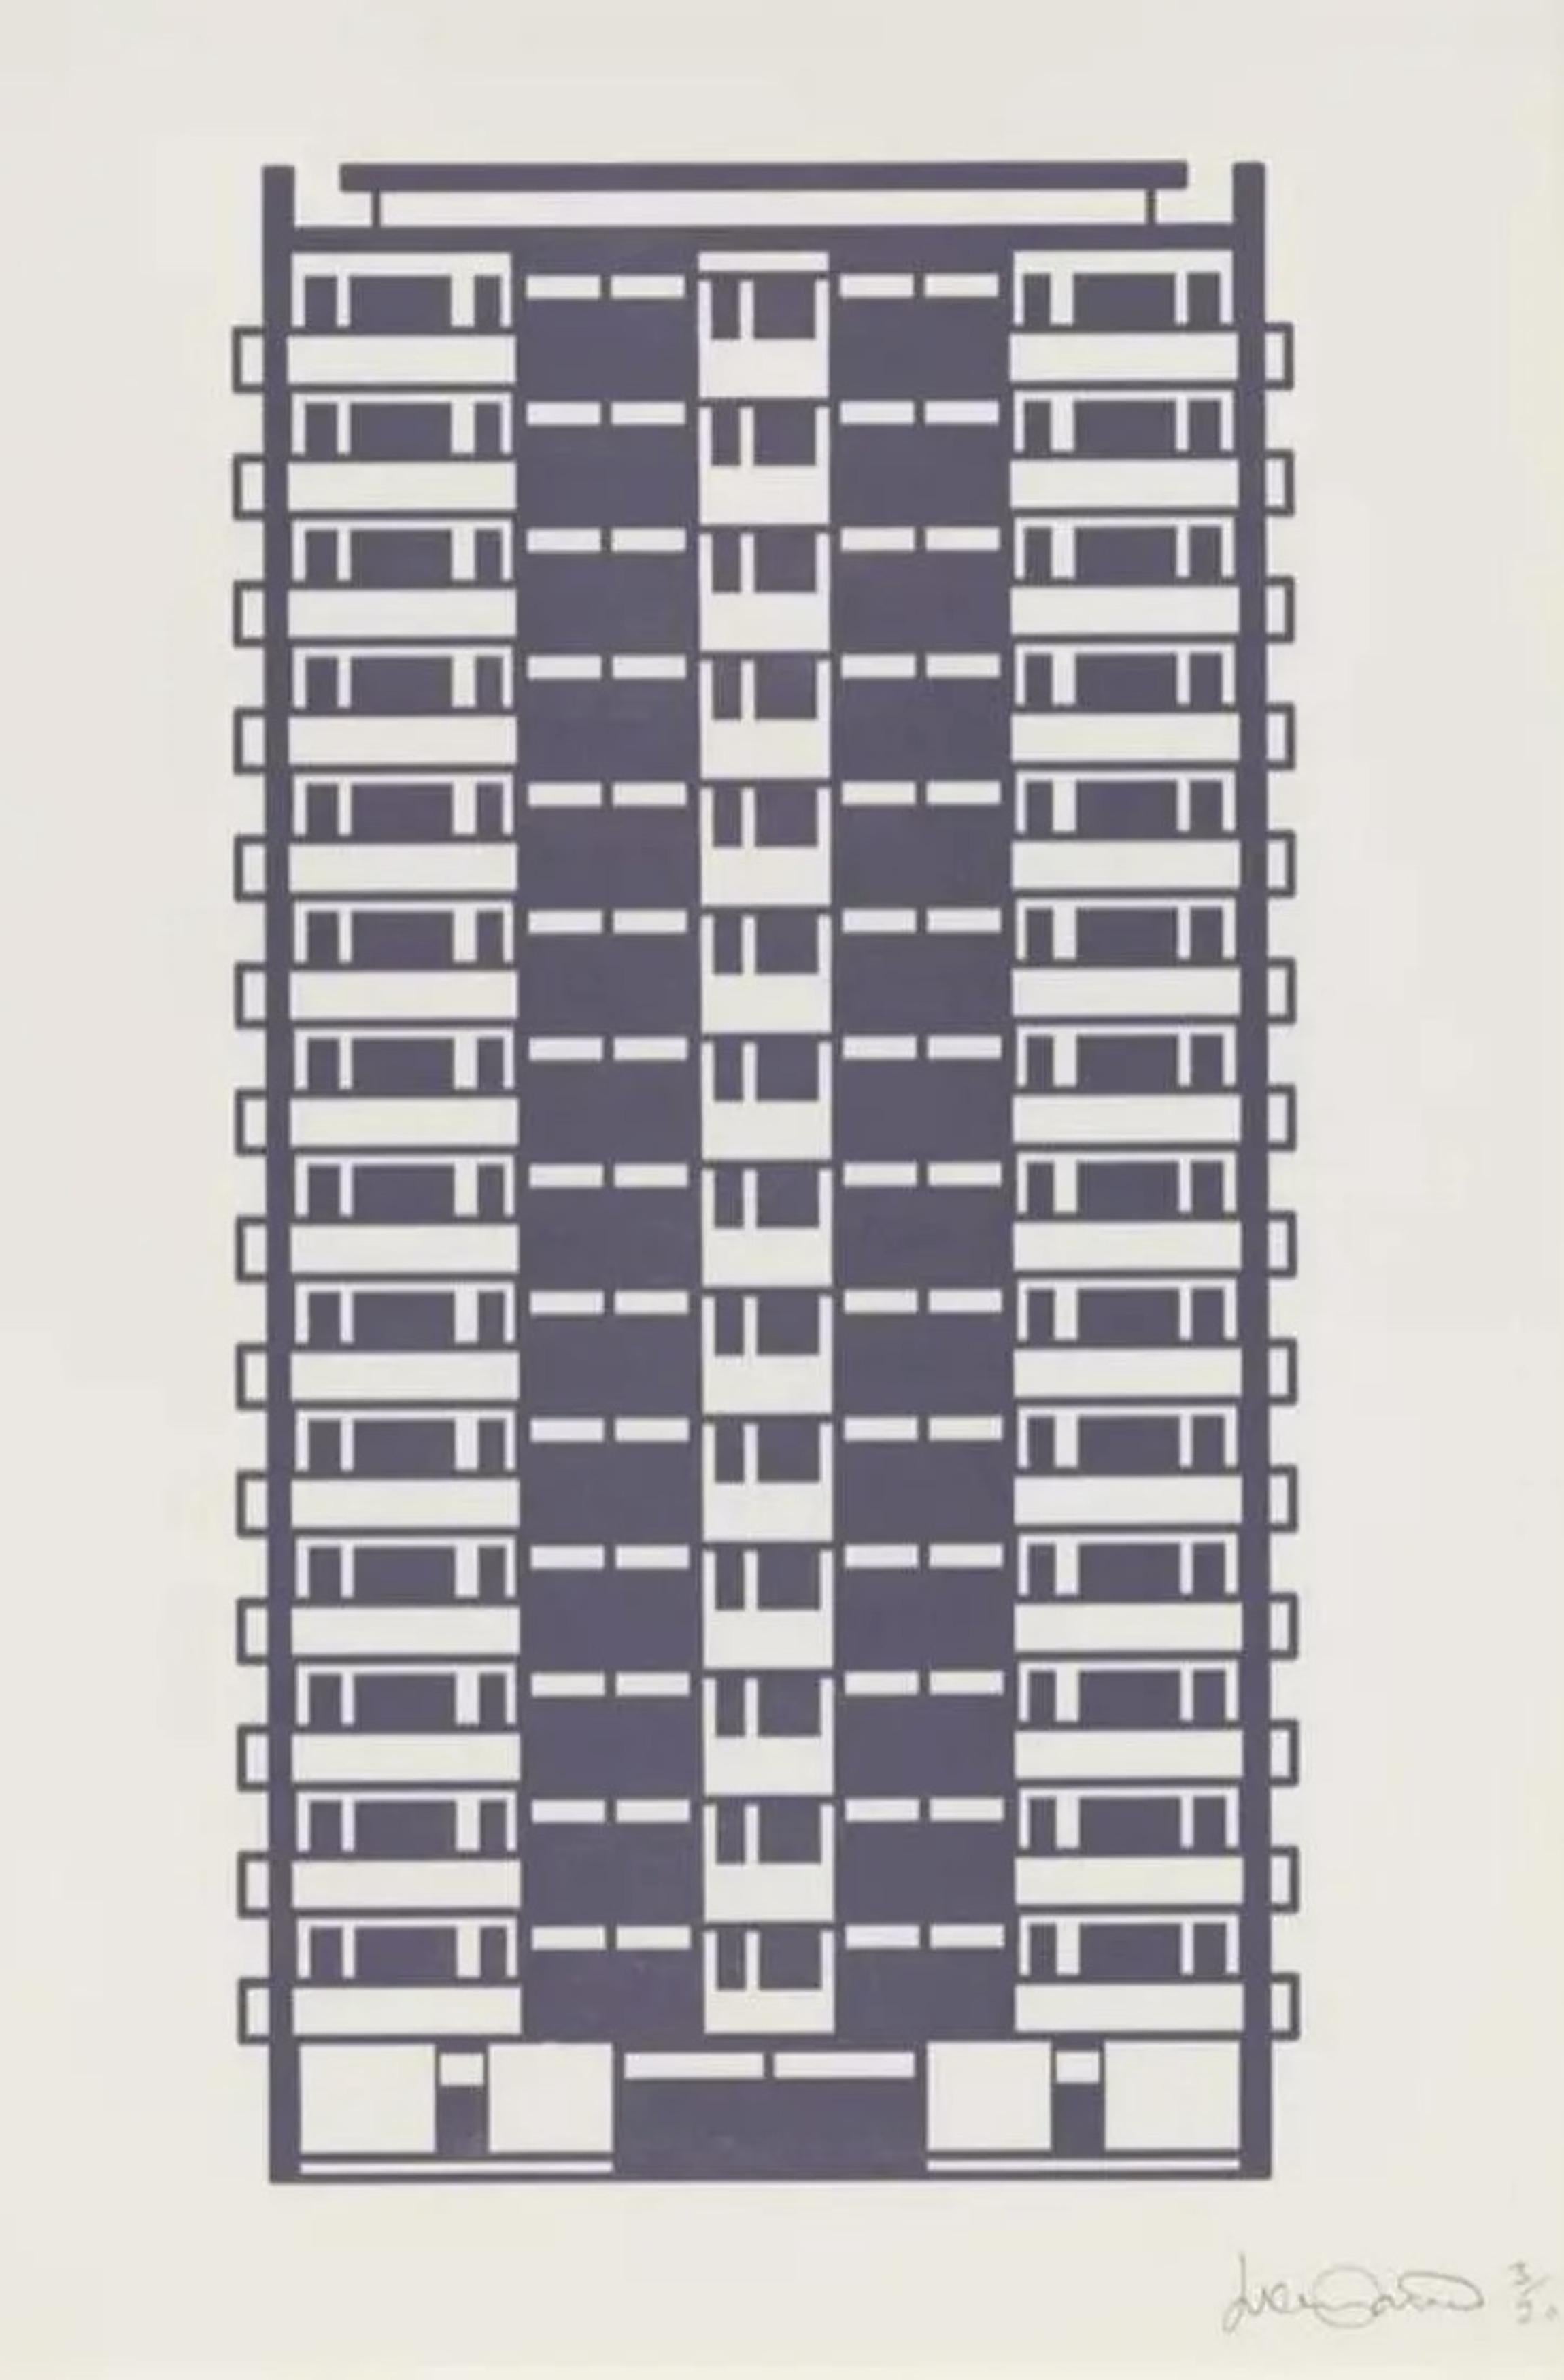 Apartment 11 - Print by Julian Opie